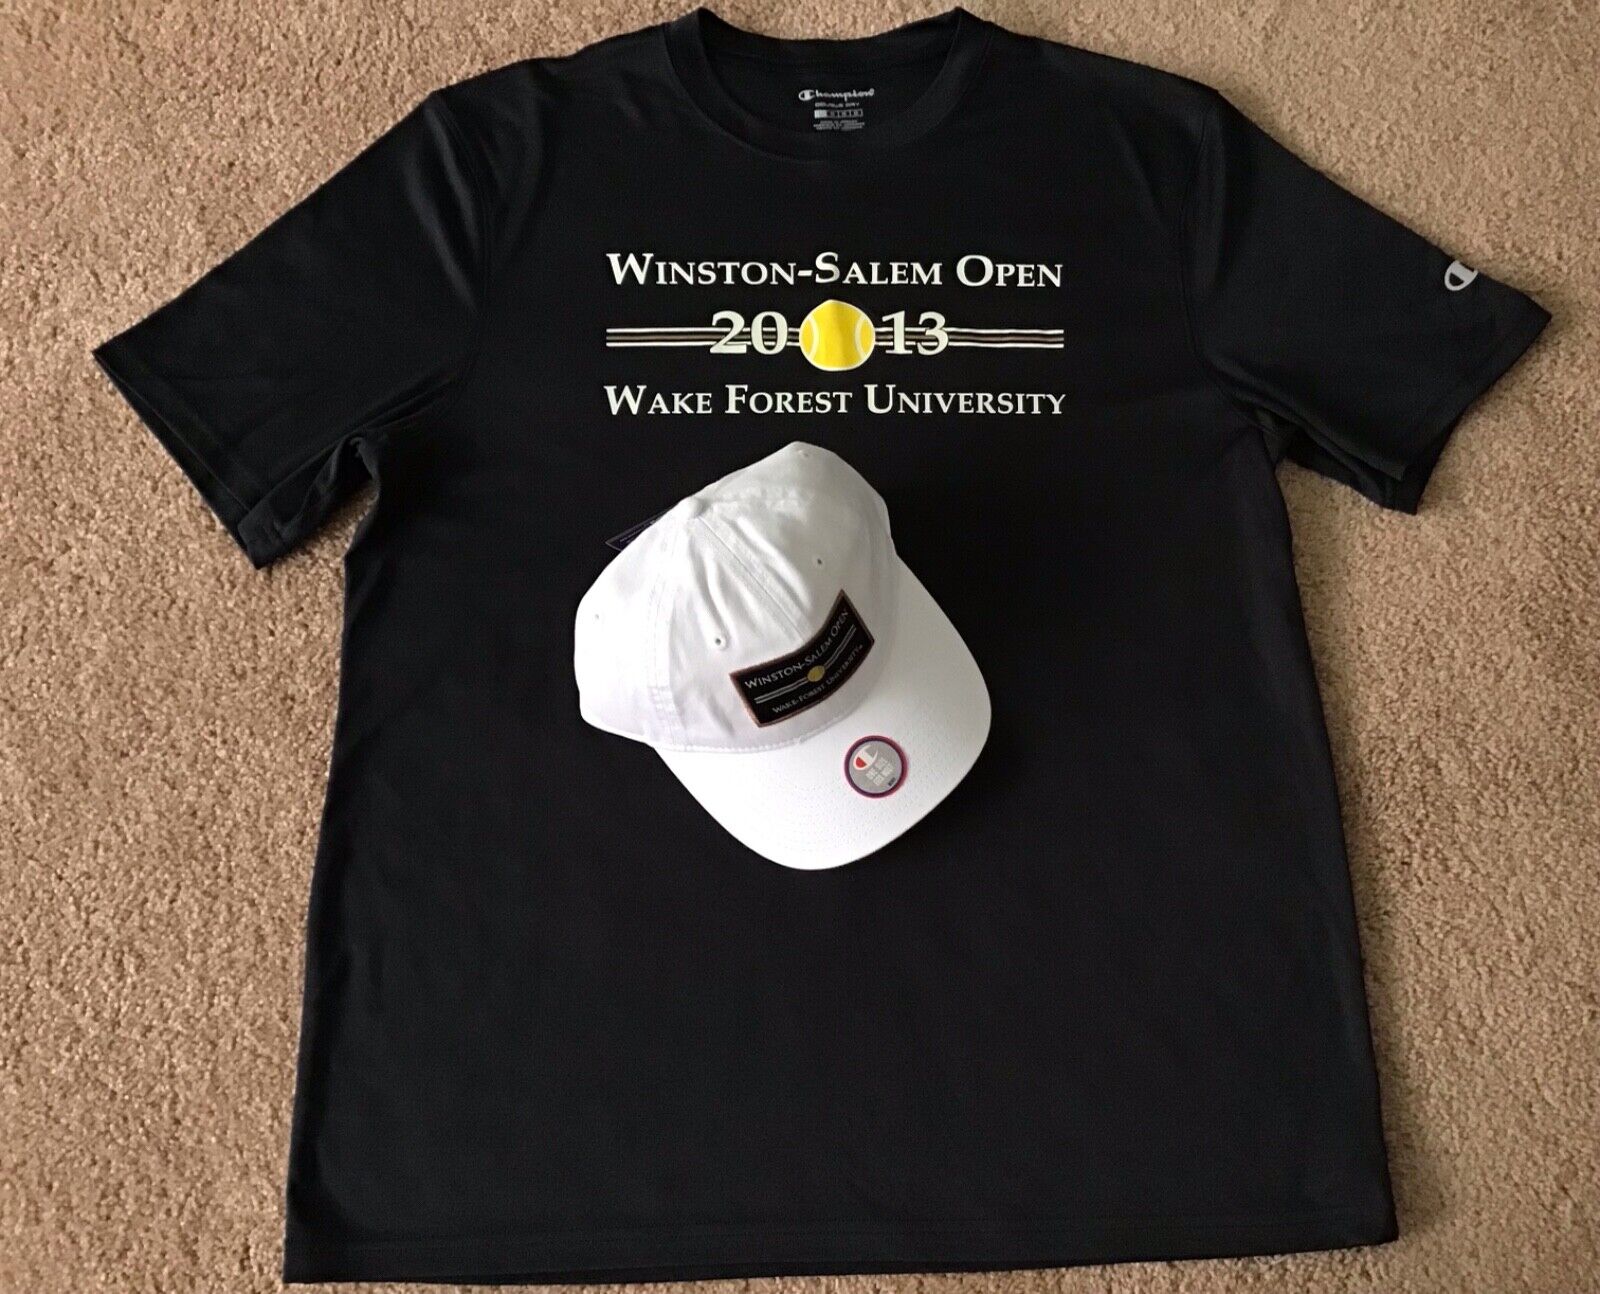 New Official Winston-salem Tennis Tournament Black Performance Shirt Large & Hat